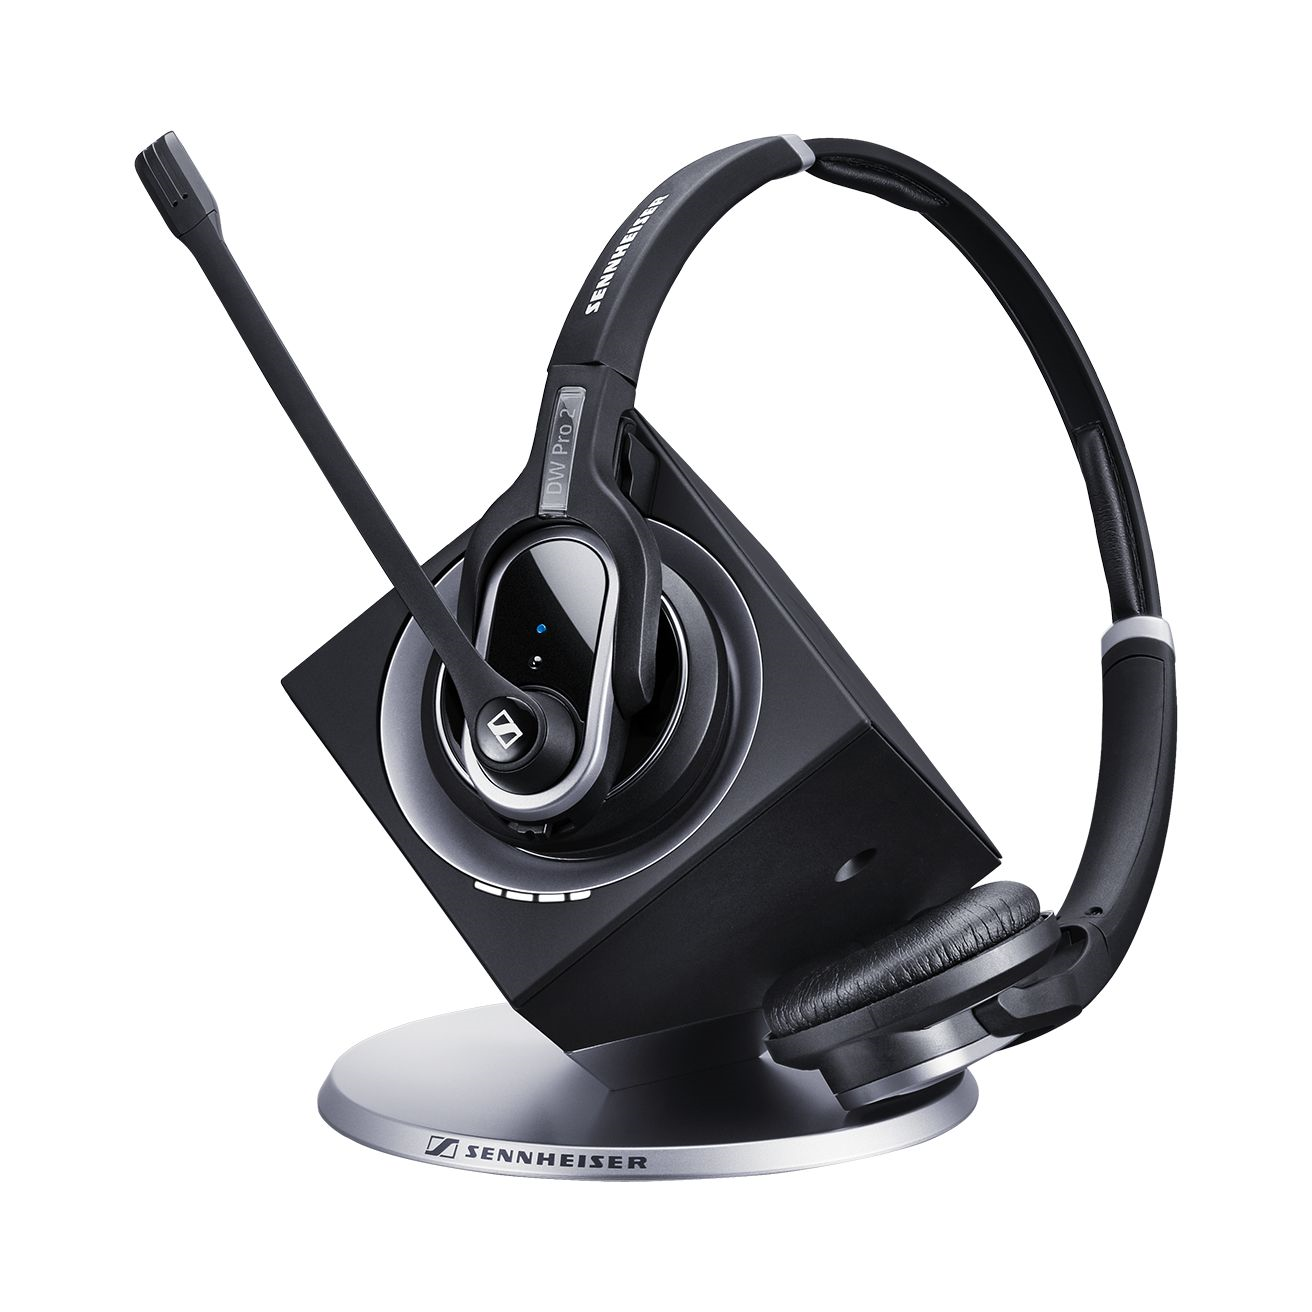 Sennheiser DW Pro2 dual-ear wireless headset with extra range